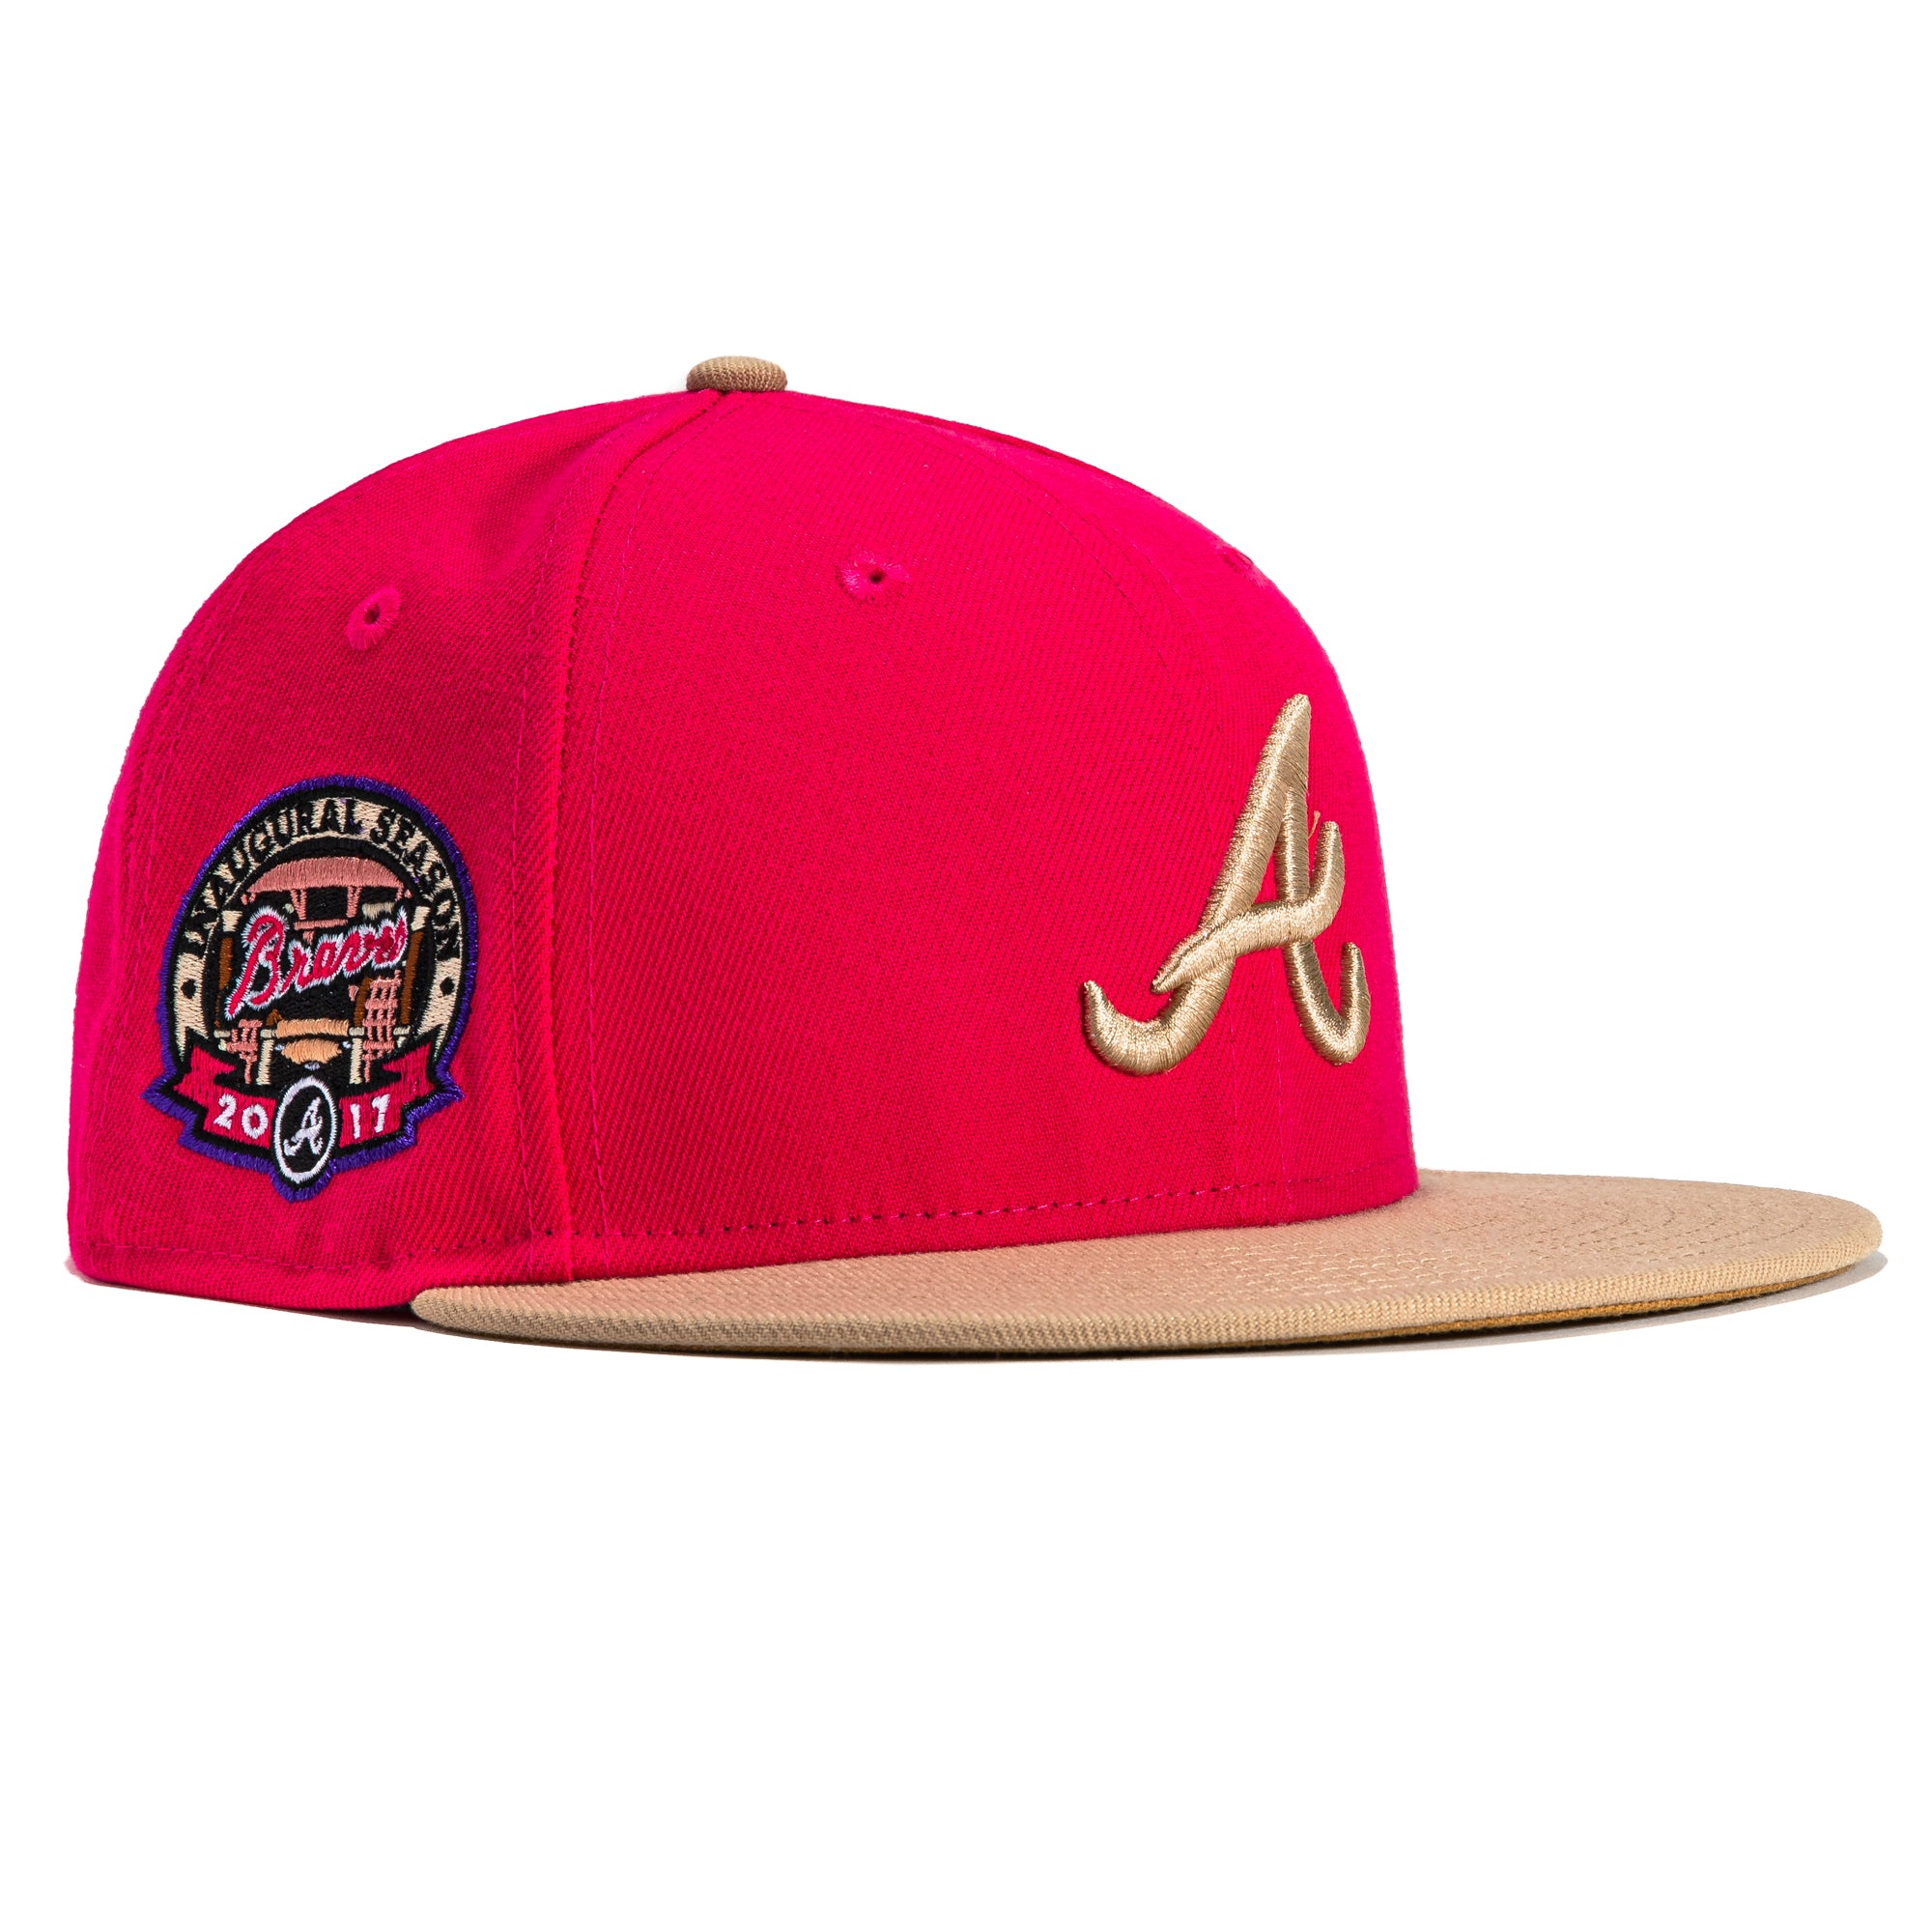 New Era 59FIFTY Atlanta Braves Inaugural Patch Hat - Magenta, Tan Magenta/Tan / 8